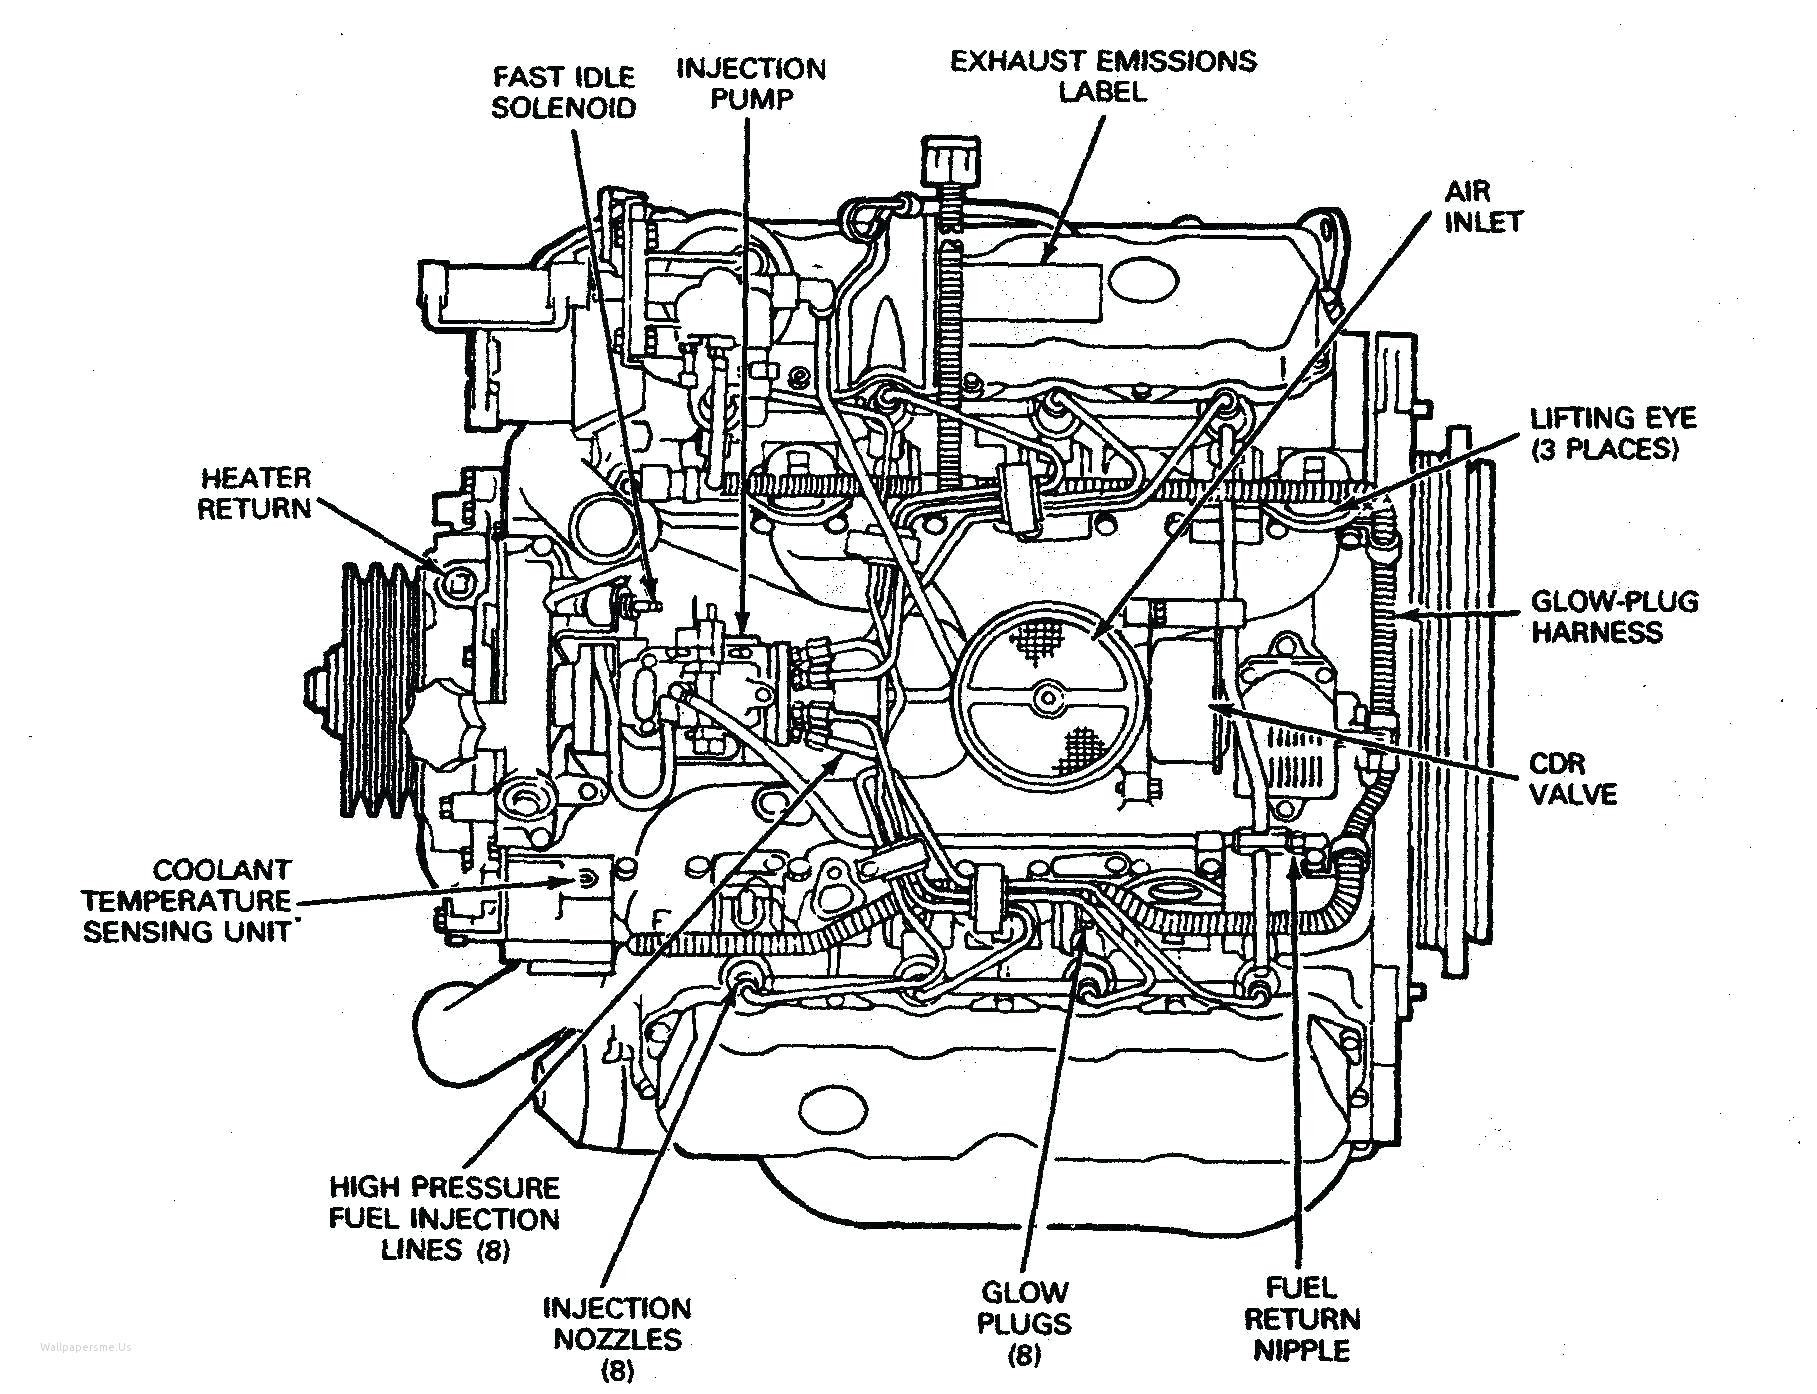 Diagram Of Car Jack Car Engine Diagram with Labeled Of Diagram Of Car Jack